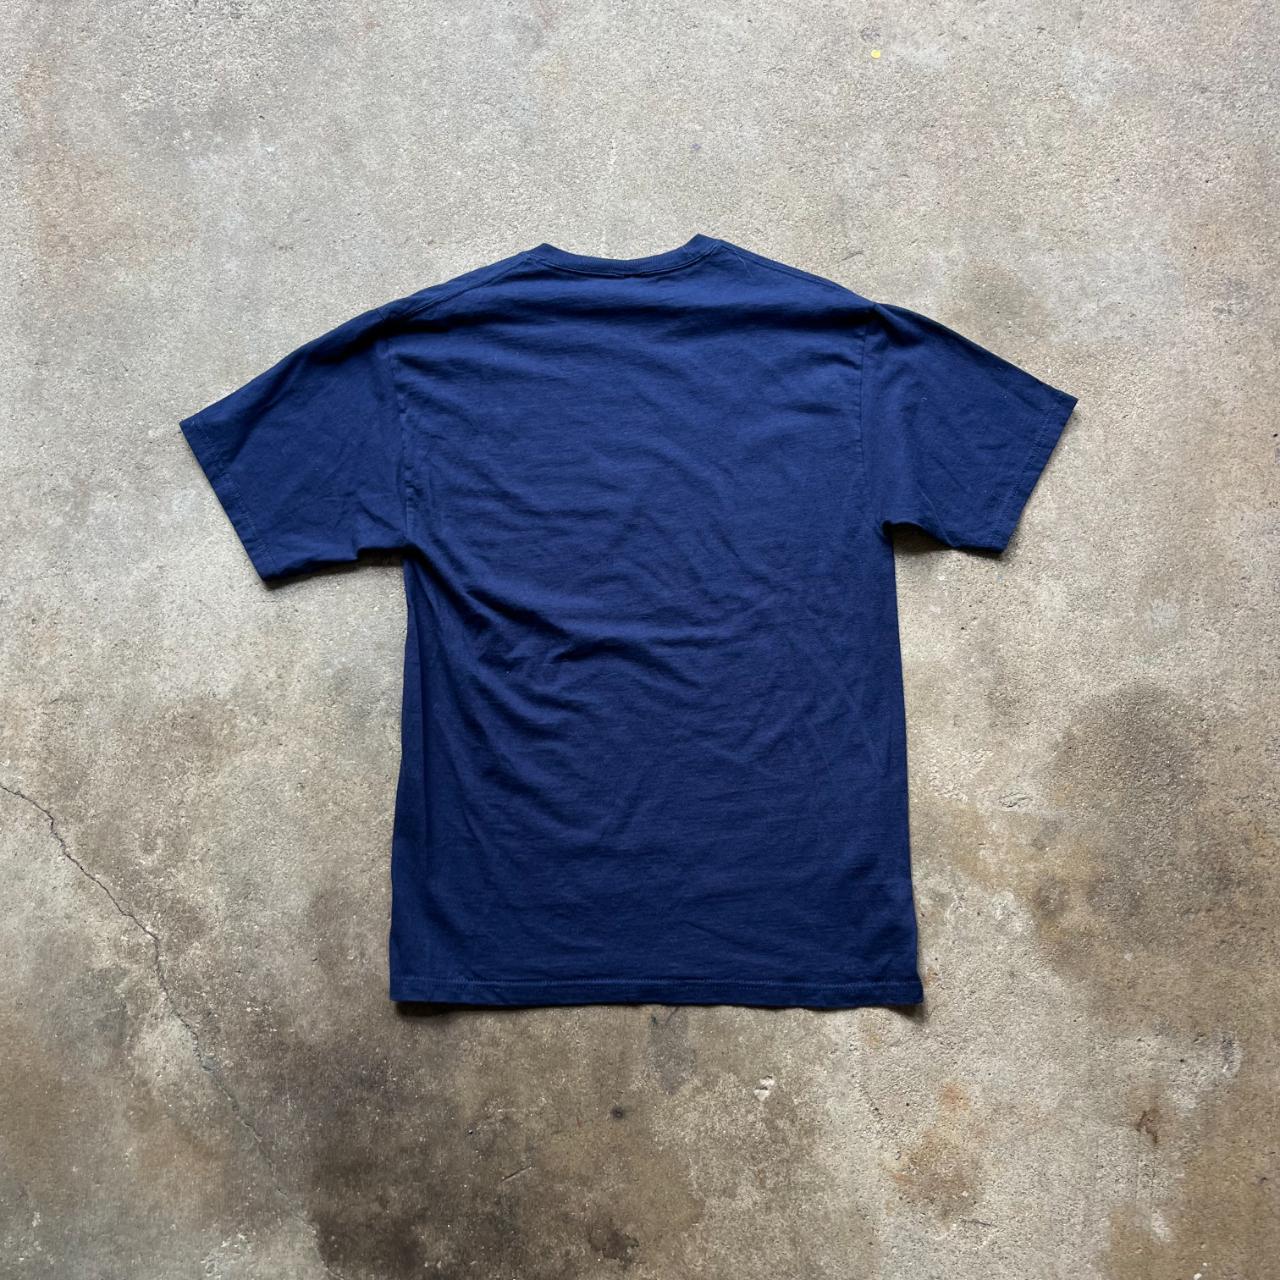 Hanes Men's Navy T-shirt